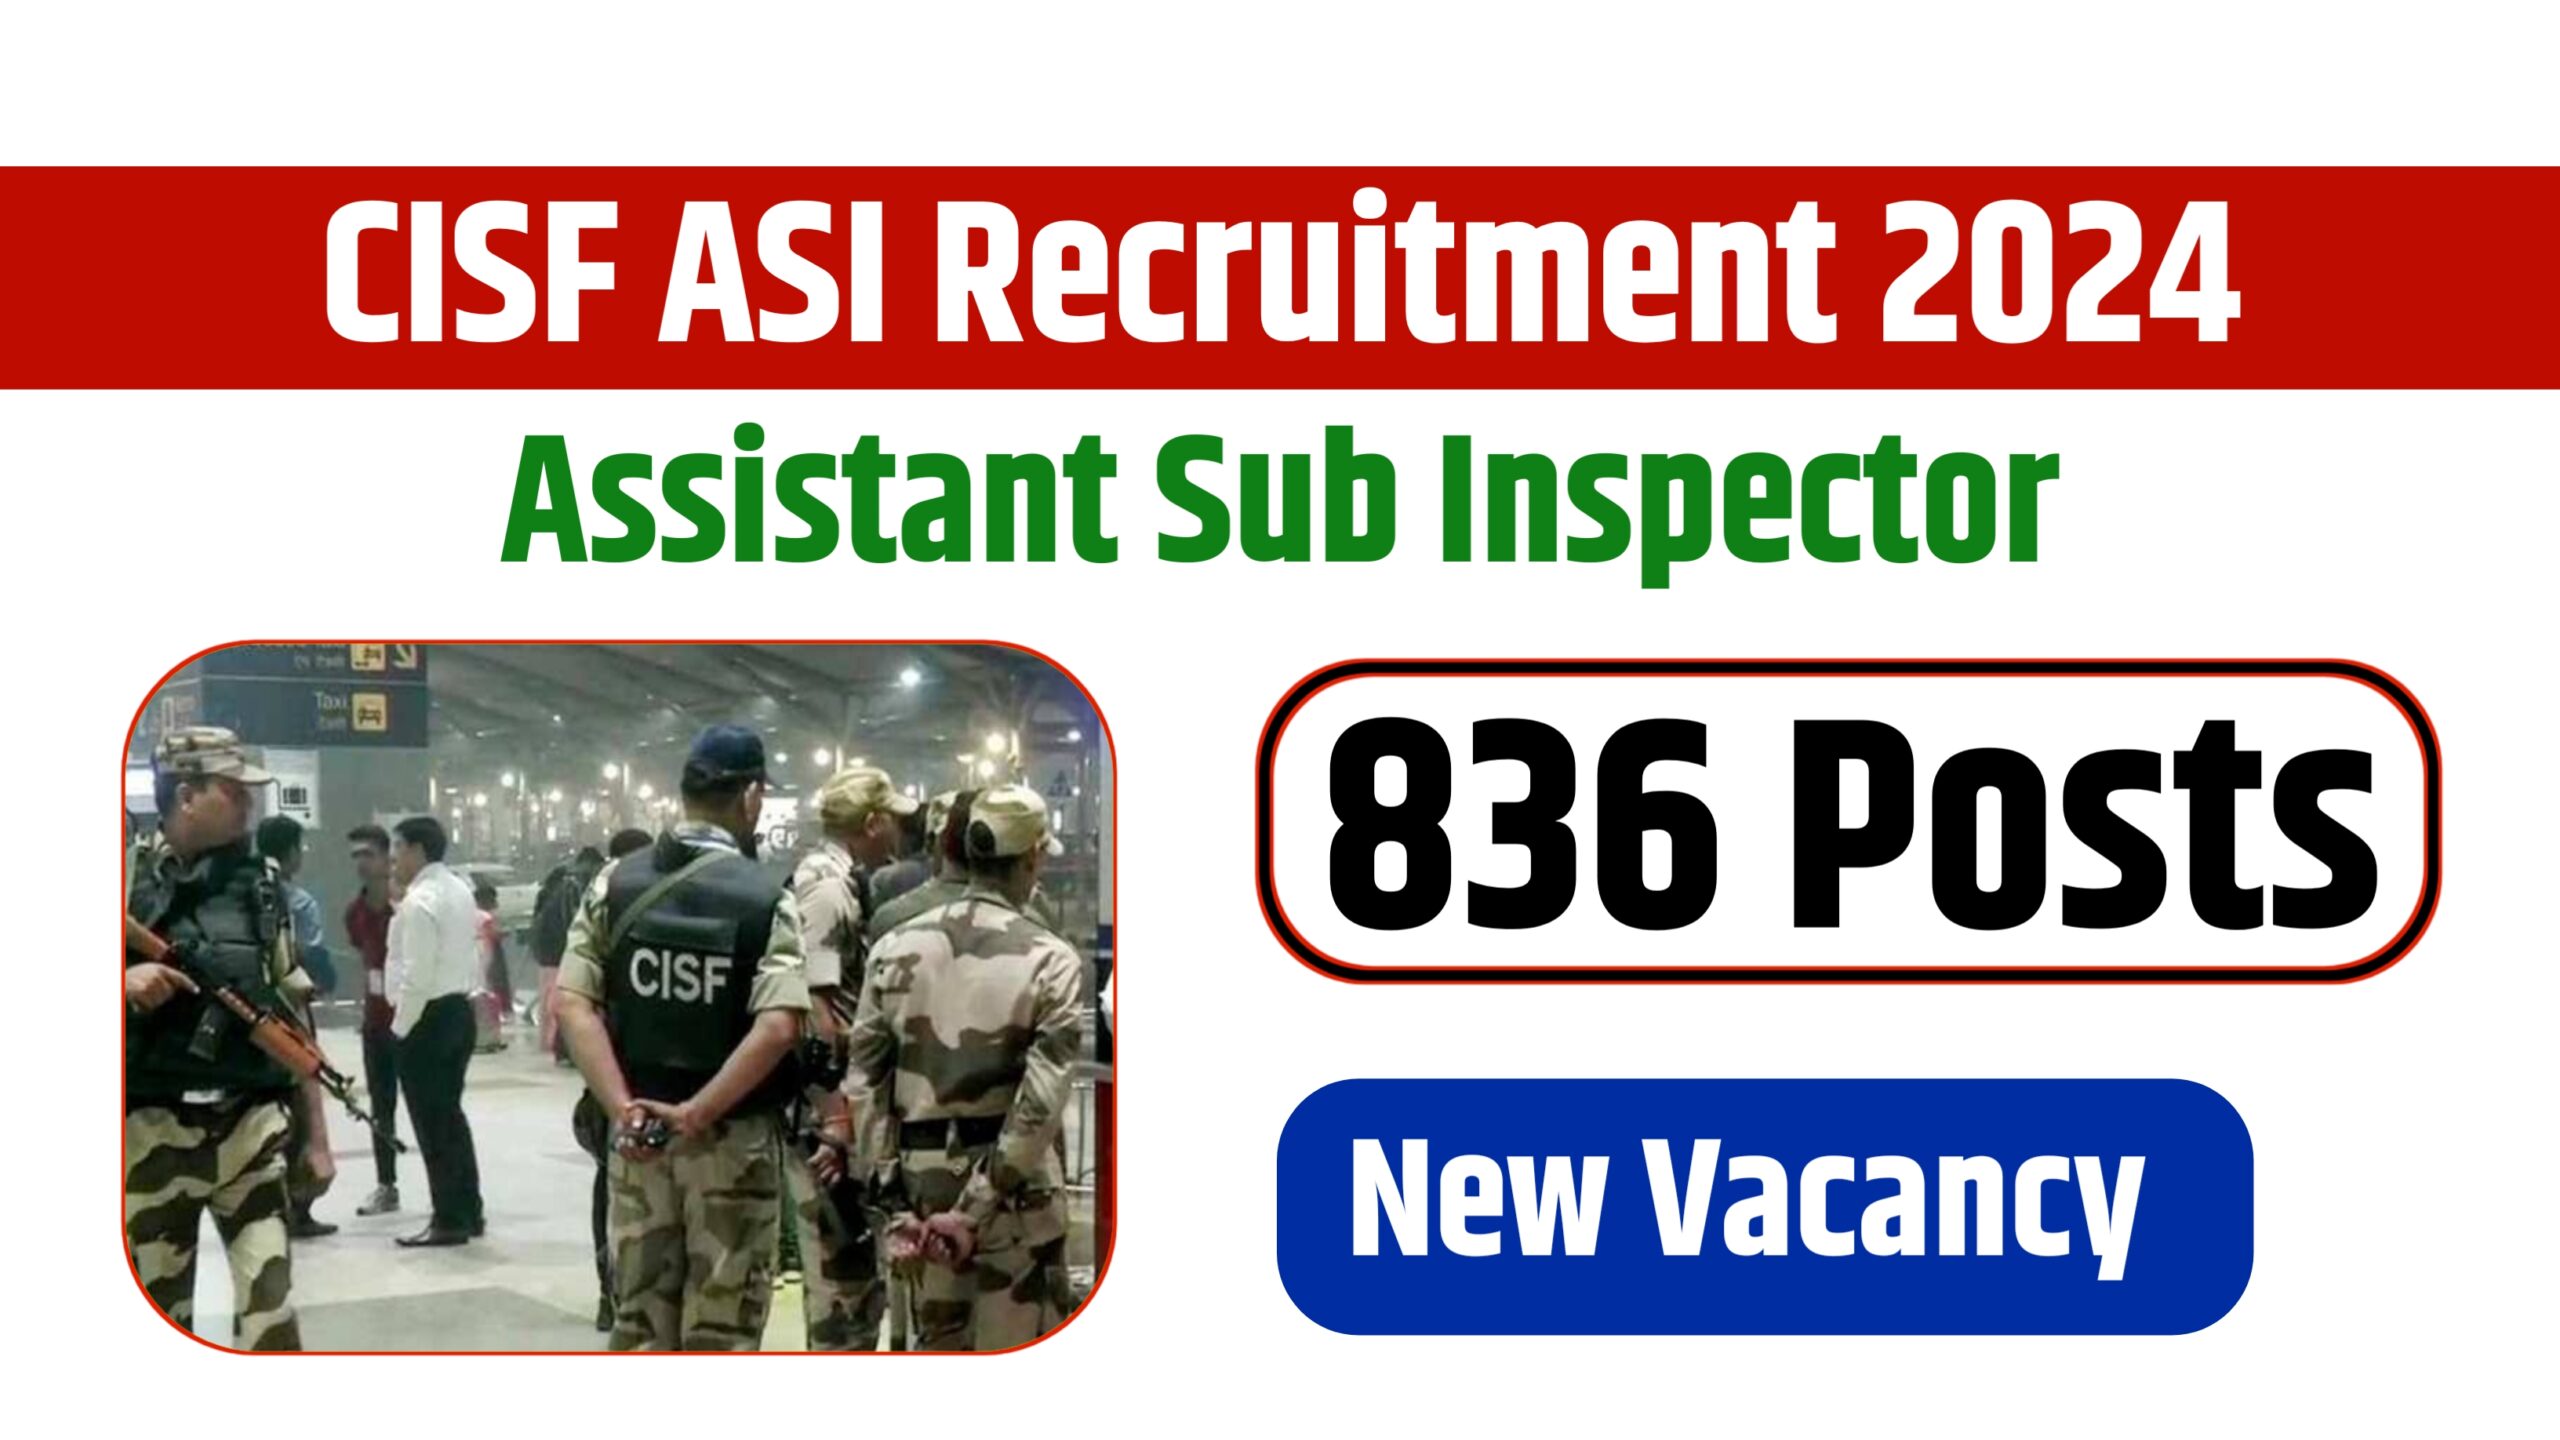 CISF ASI Recruitment 2024